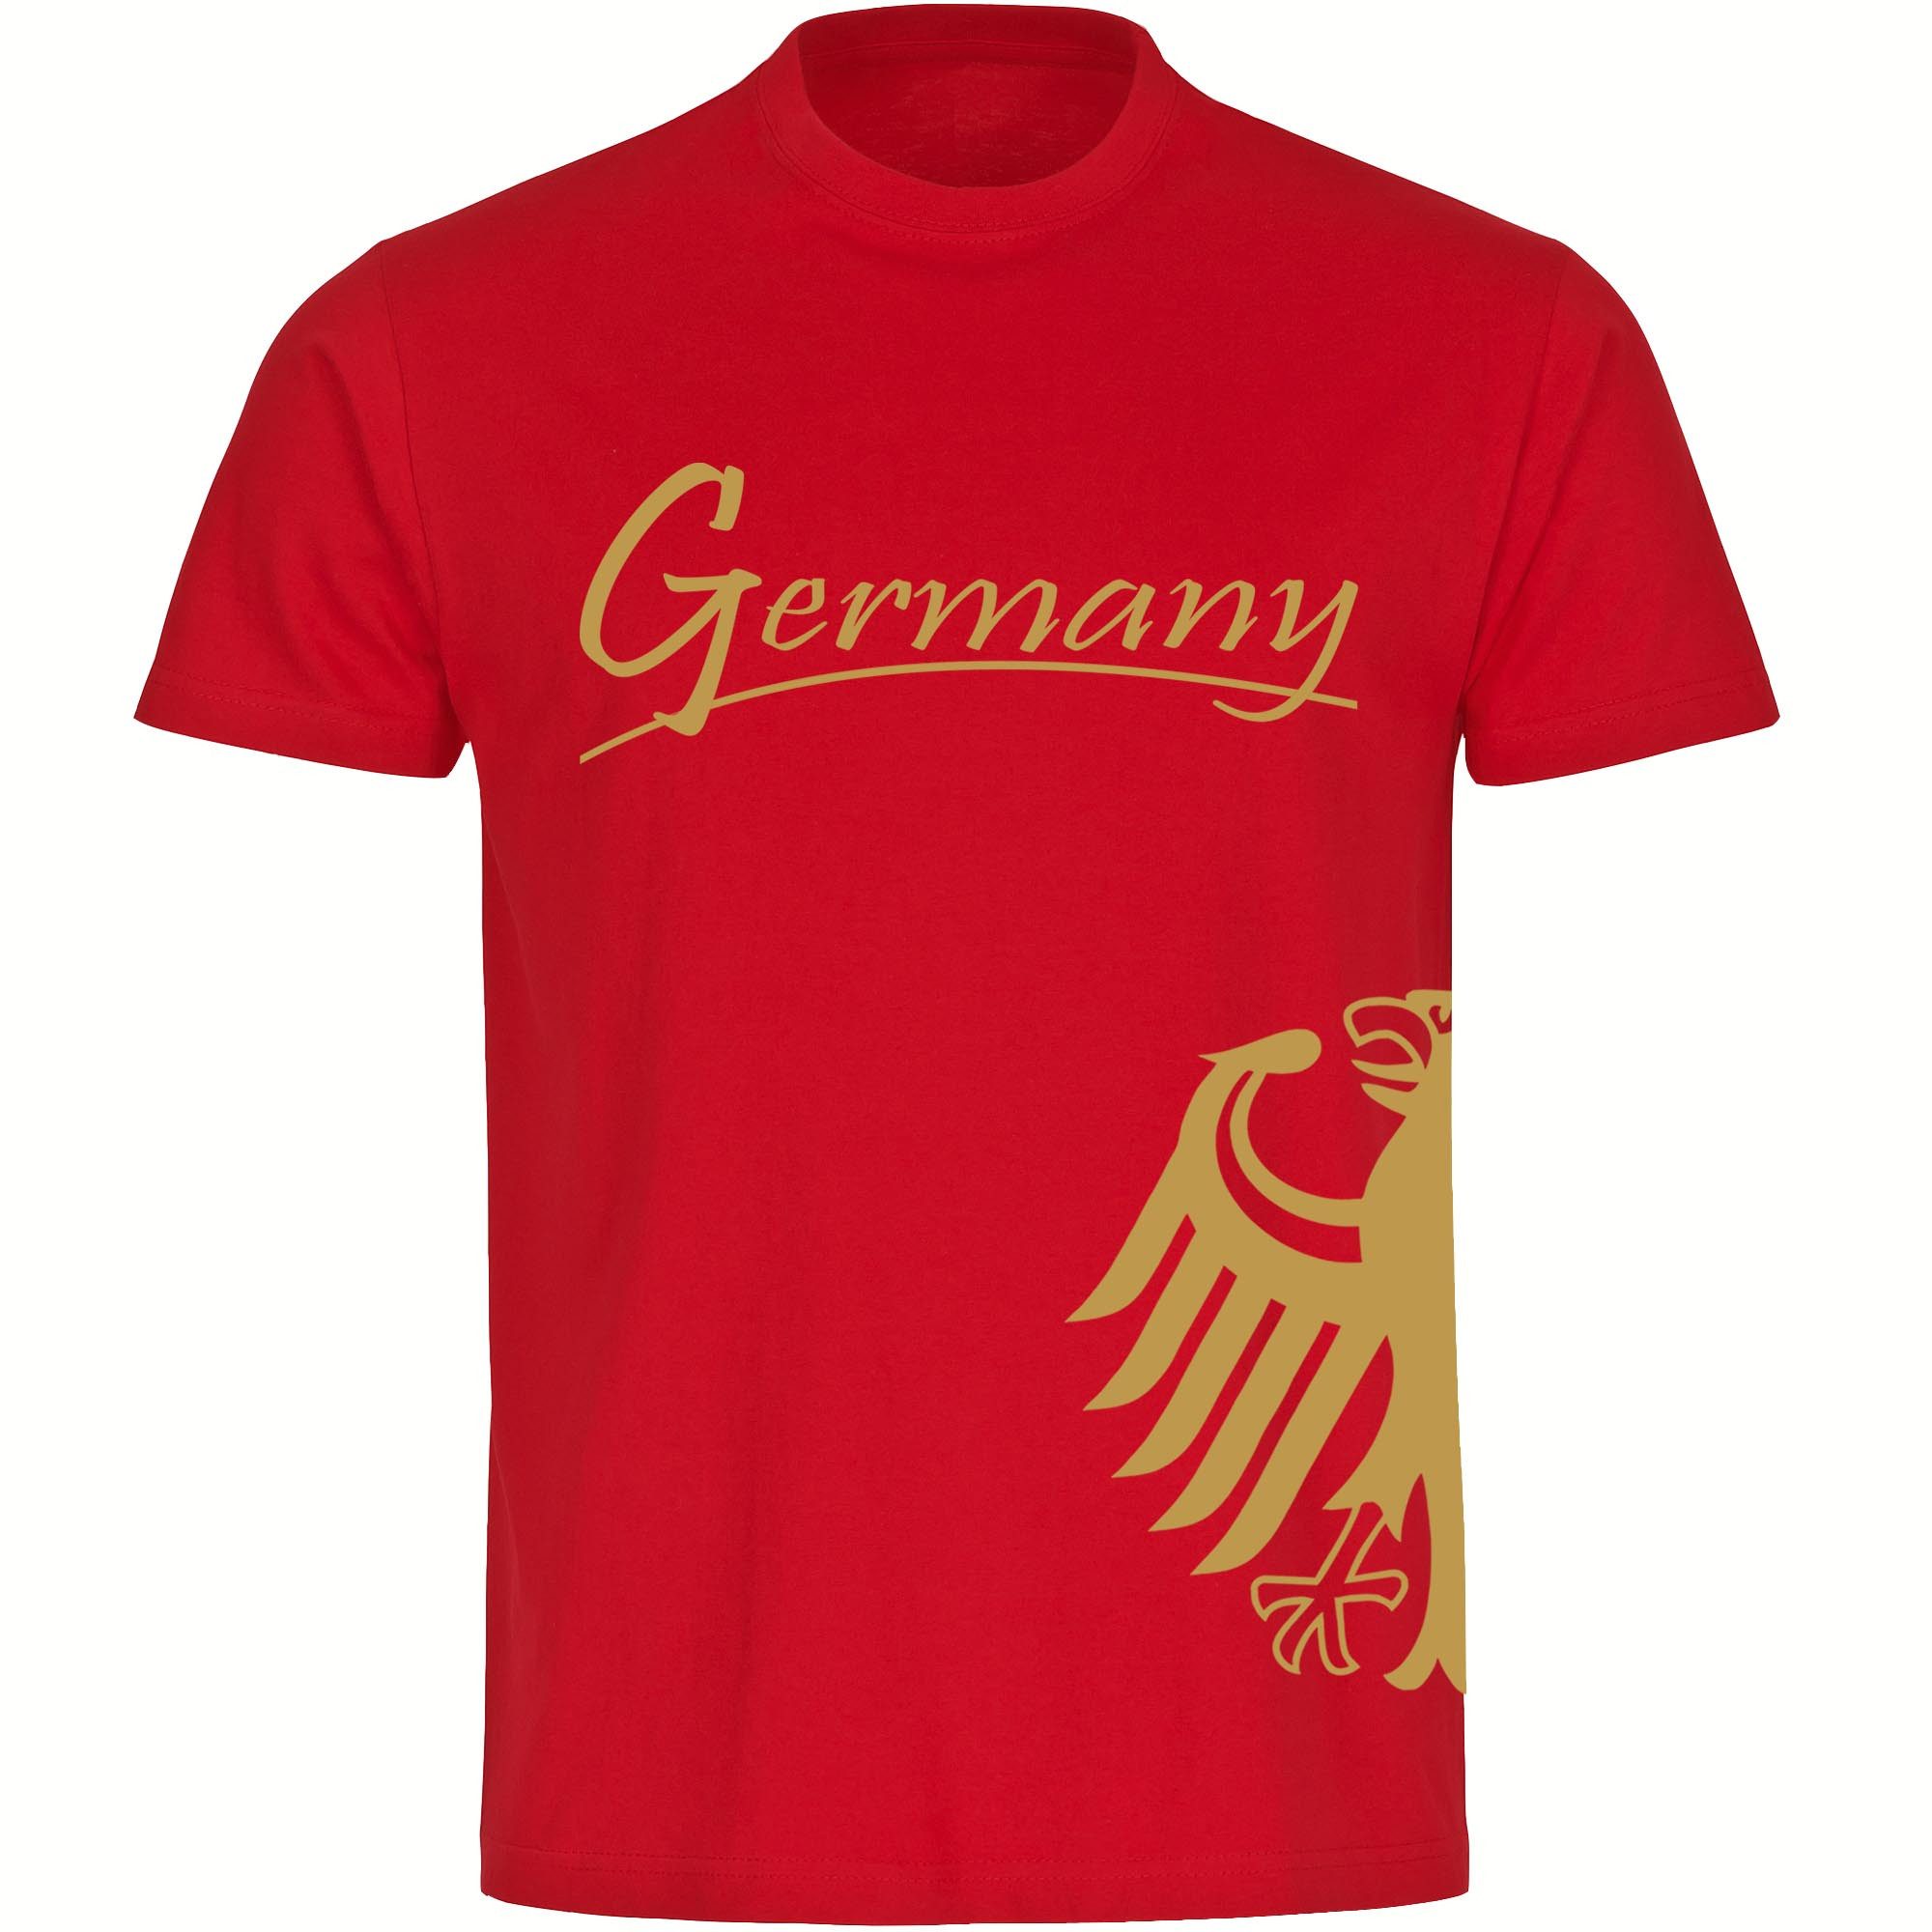 multifanshop T-Shirt Kinder Germany - Adler seitlich Gold - Boy Girl